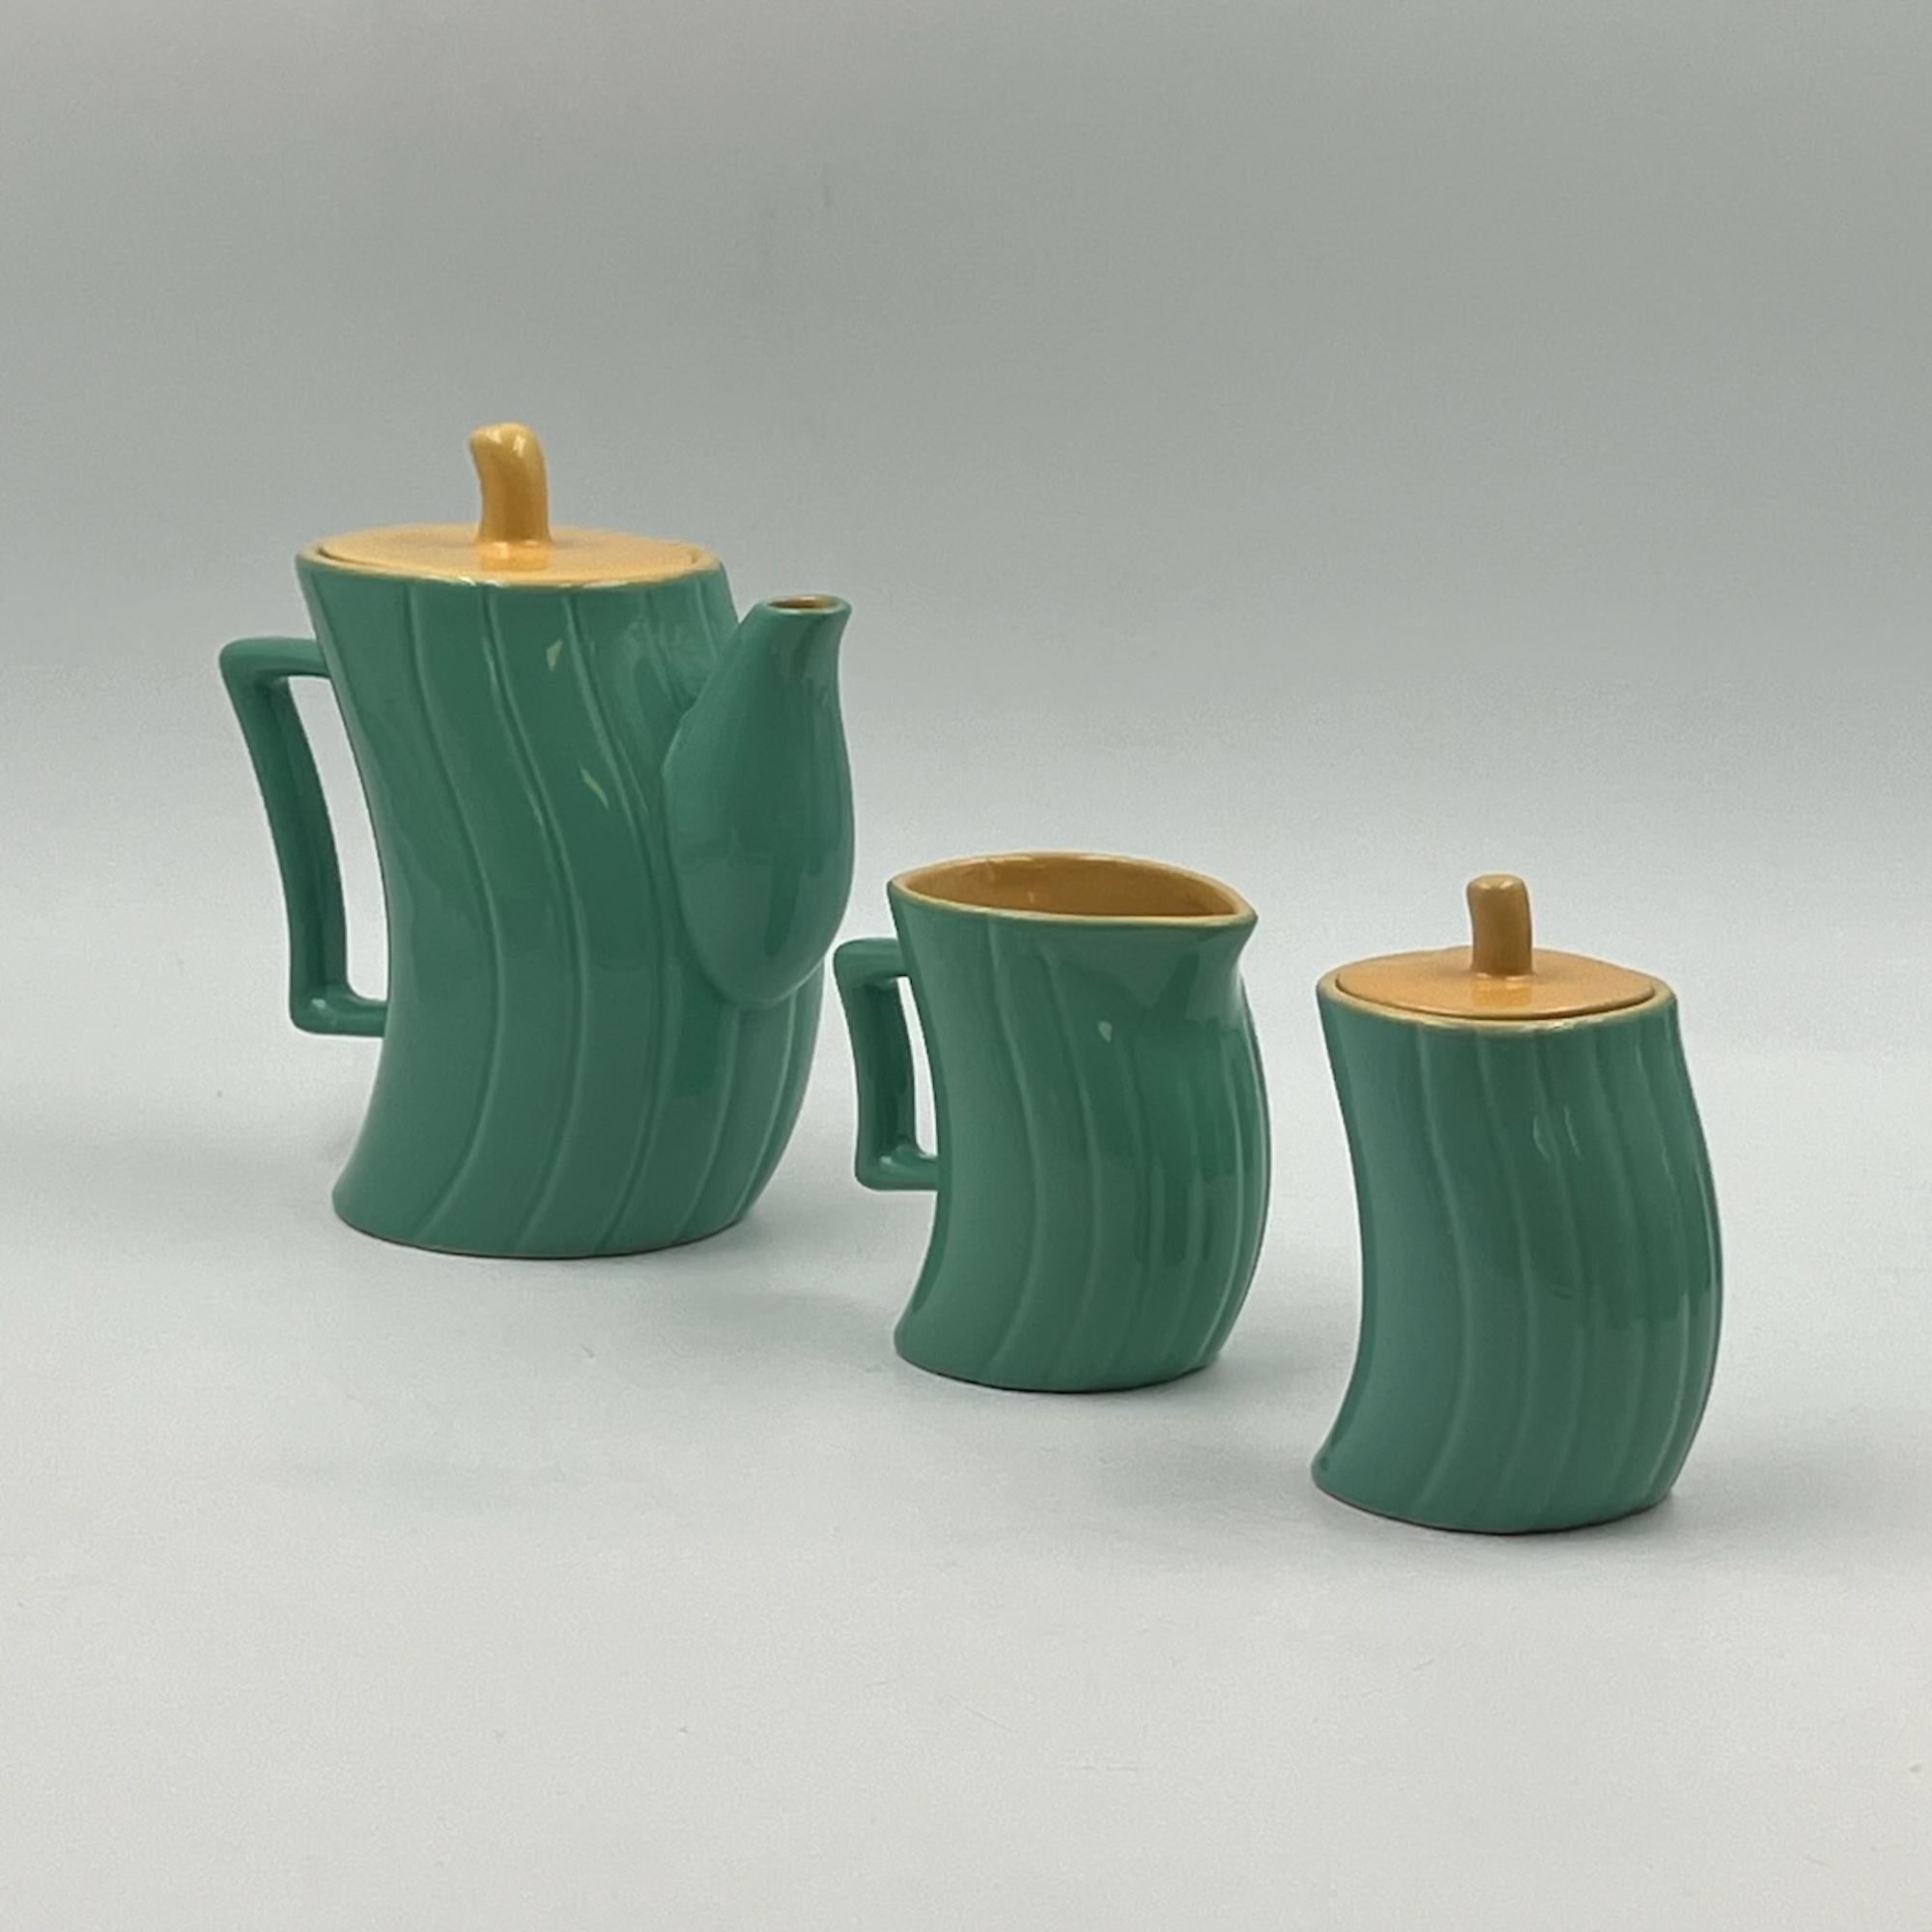 Vintage Memphis Naj Oleari Ceramic Tea Set by Massimo Iosa Ghini - 1980s For Sale 1